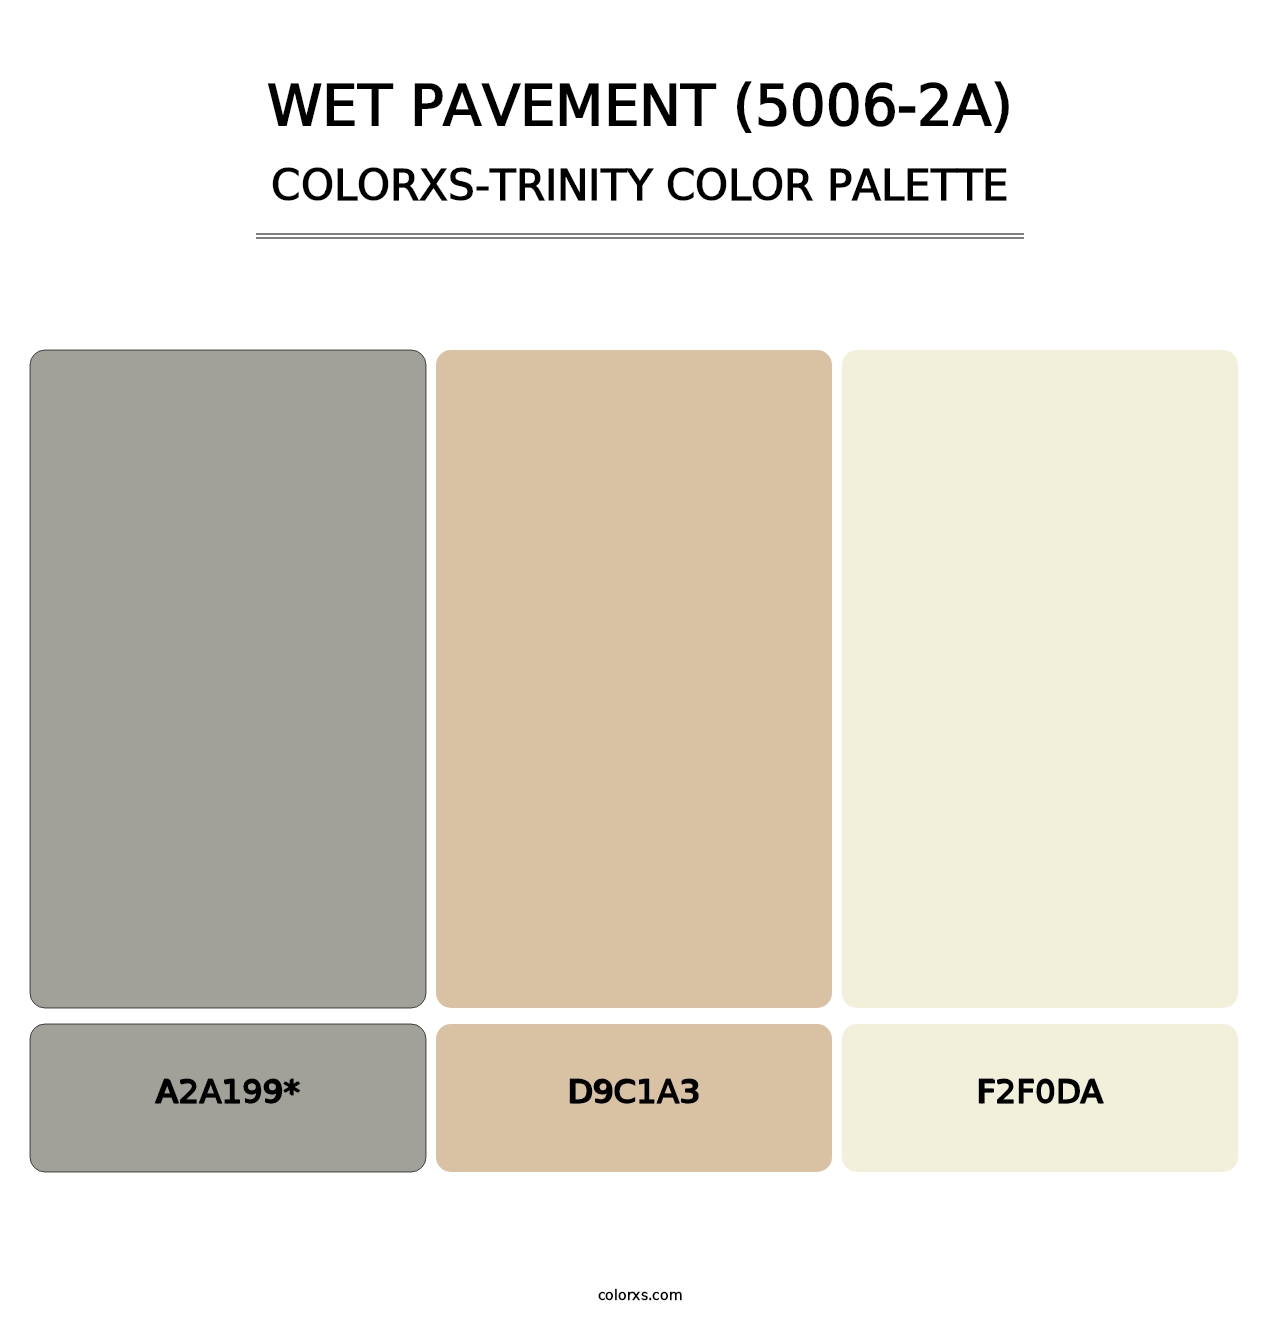 Wet Pavement (5006-2A) - Colorxs Trinity Palette